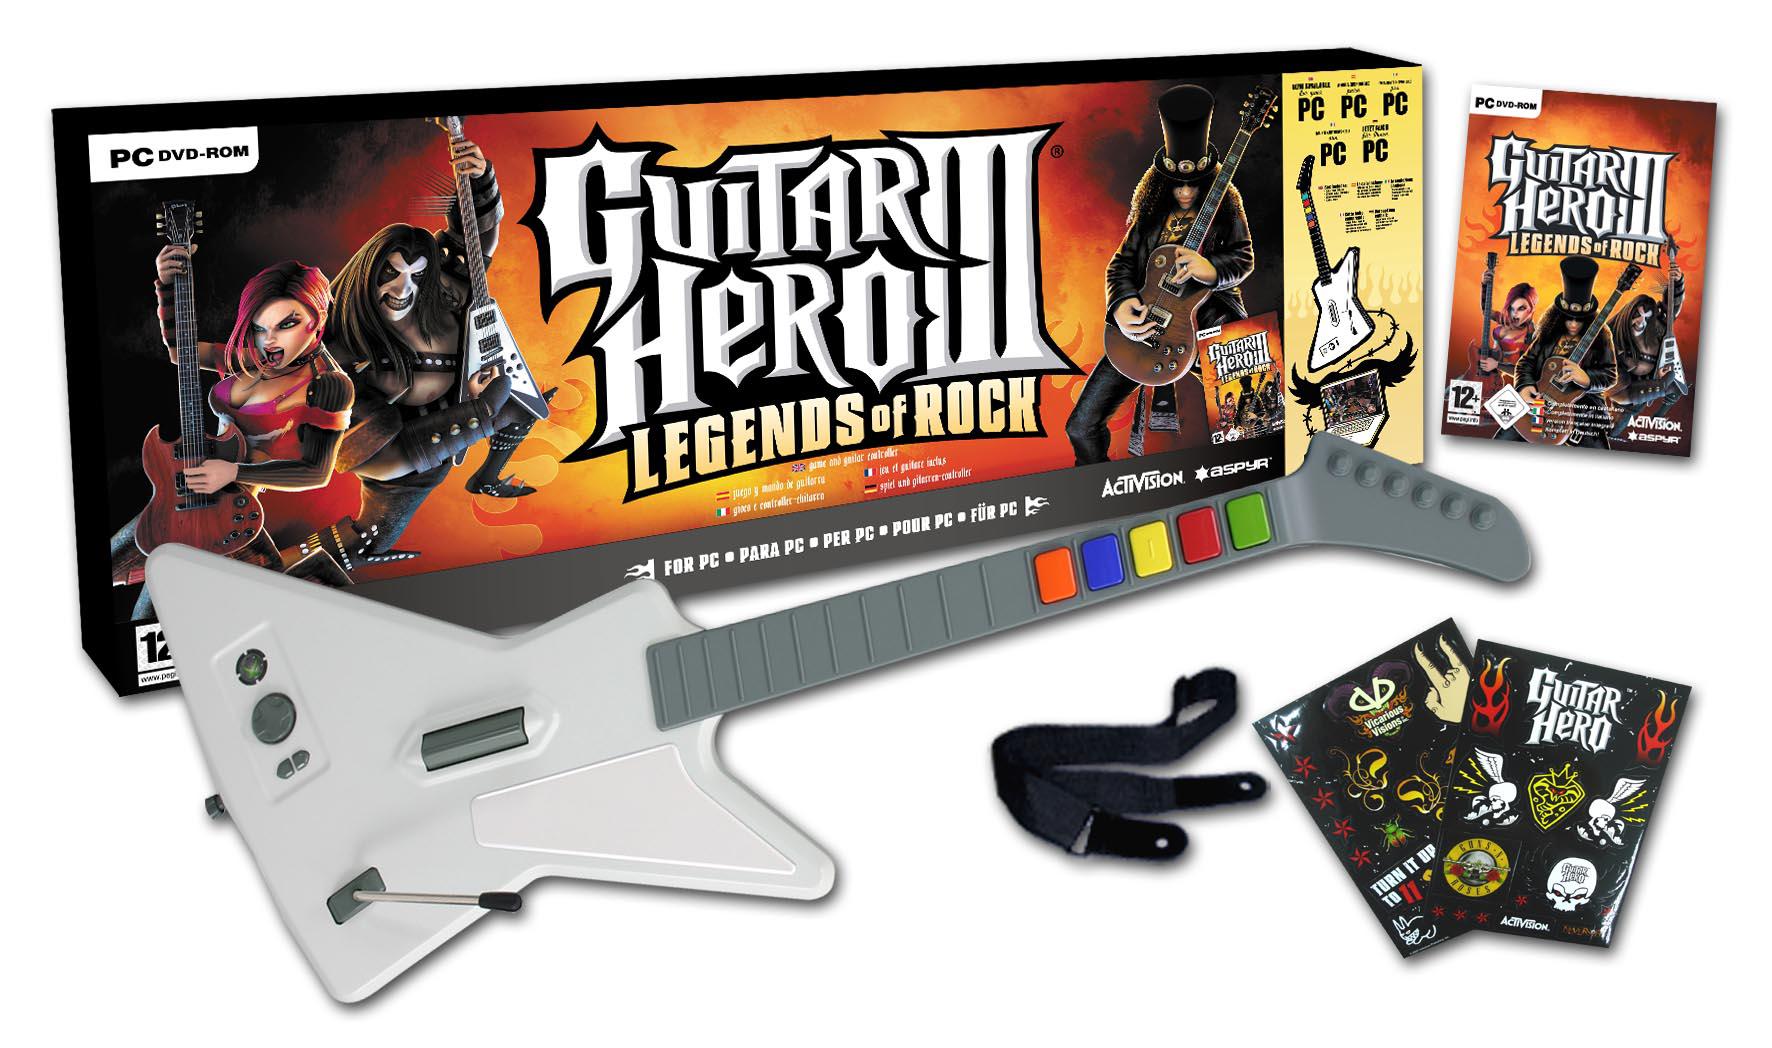 guitar hero 3 pc game free download